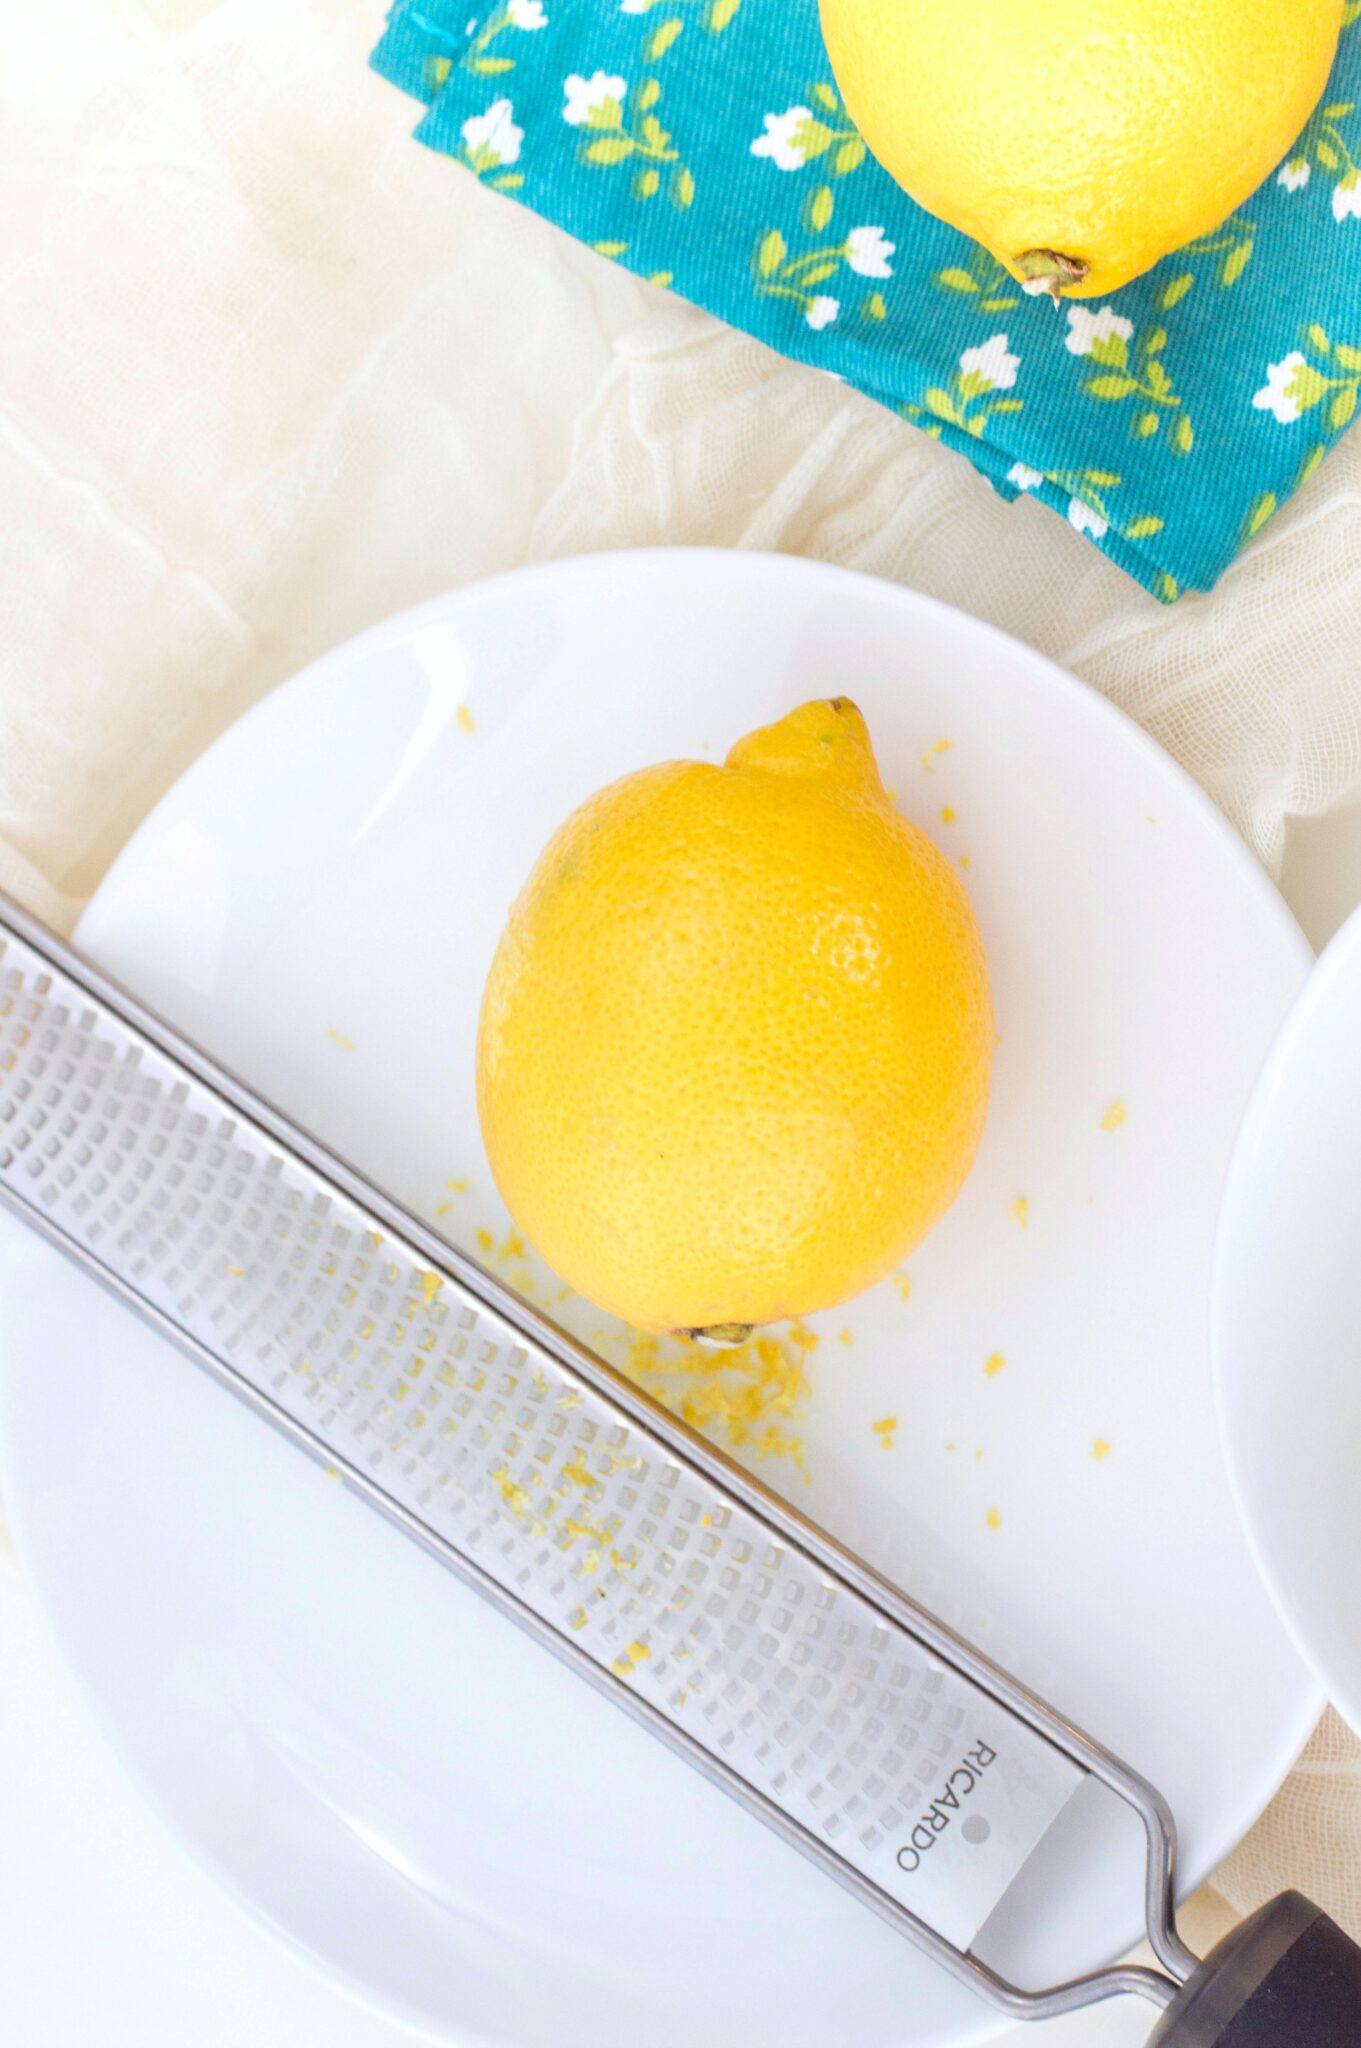 Lemon on a plate being zested for the Mini Lemon Meringue tarts.